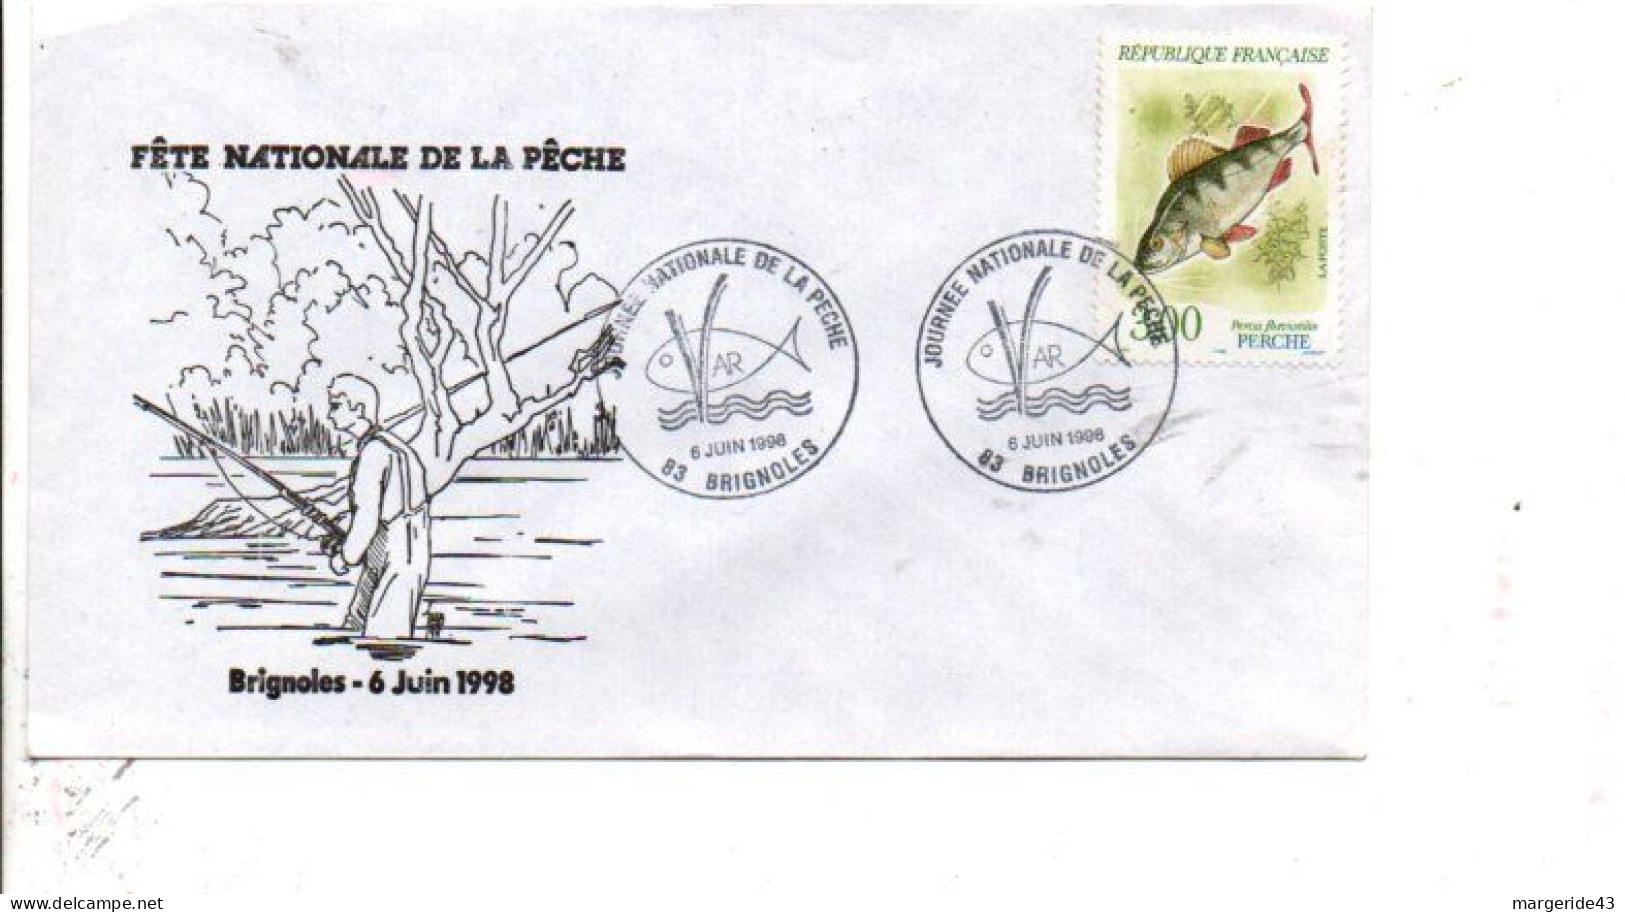 JOURNEE NATIONALE DE LA PECHE 1998 - Bolli Commemorativi